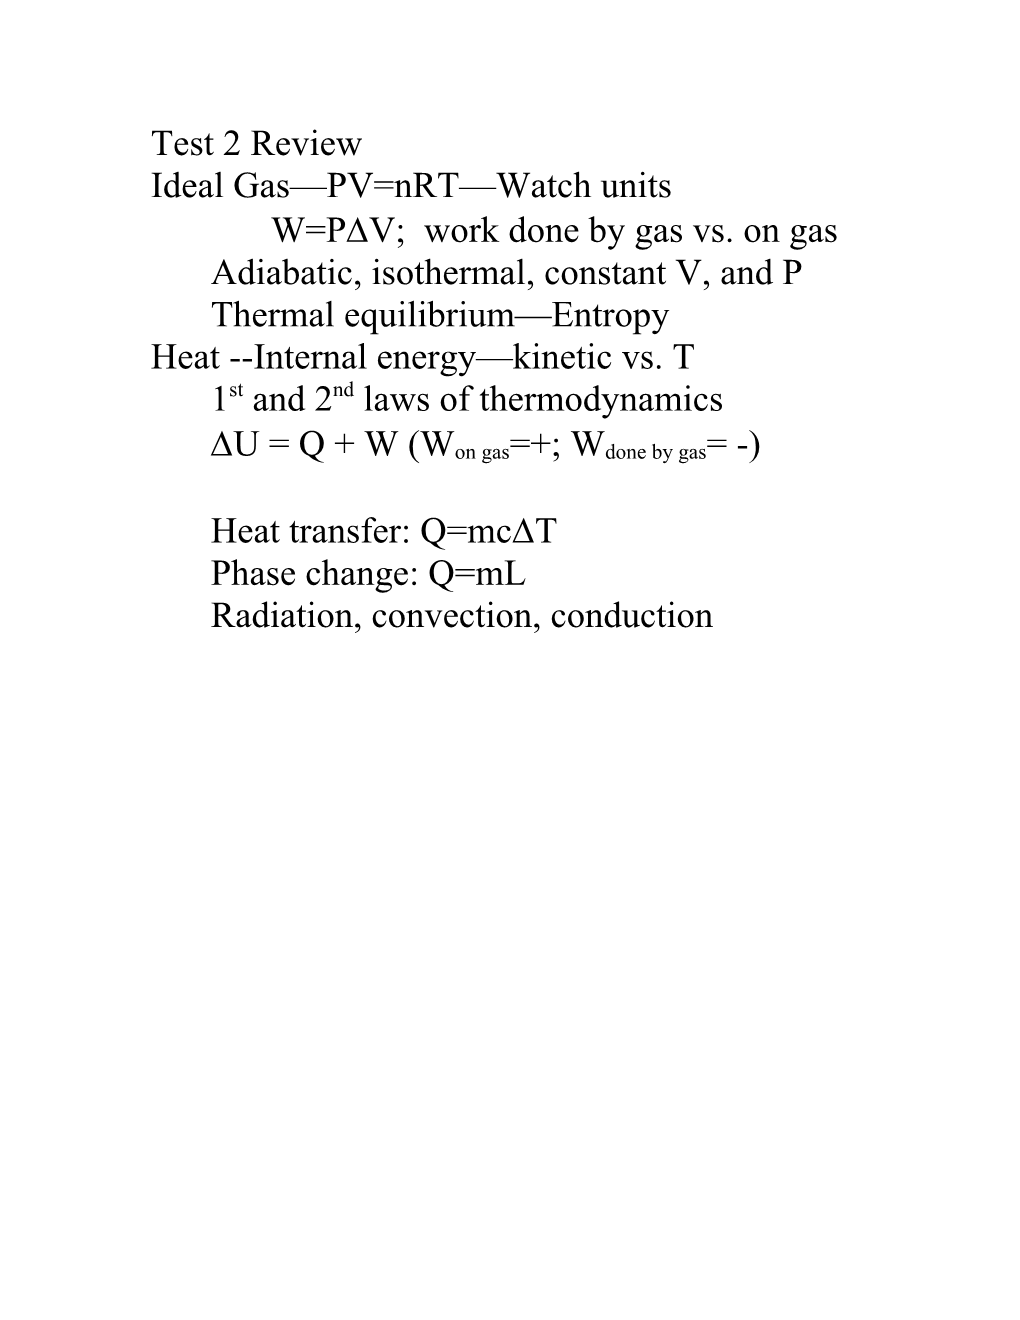 Ideal Gas PV=Nrt Watch Units